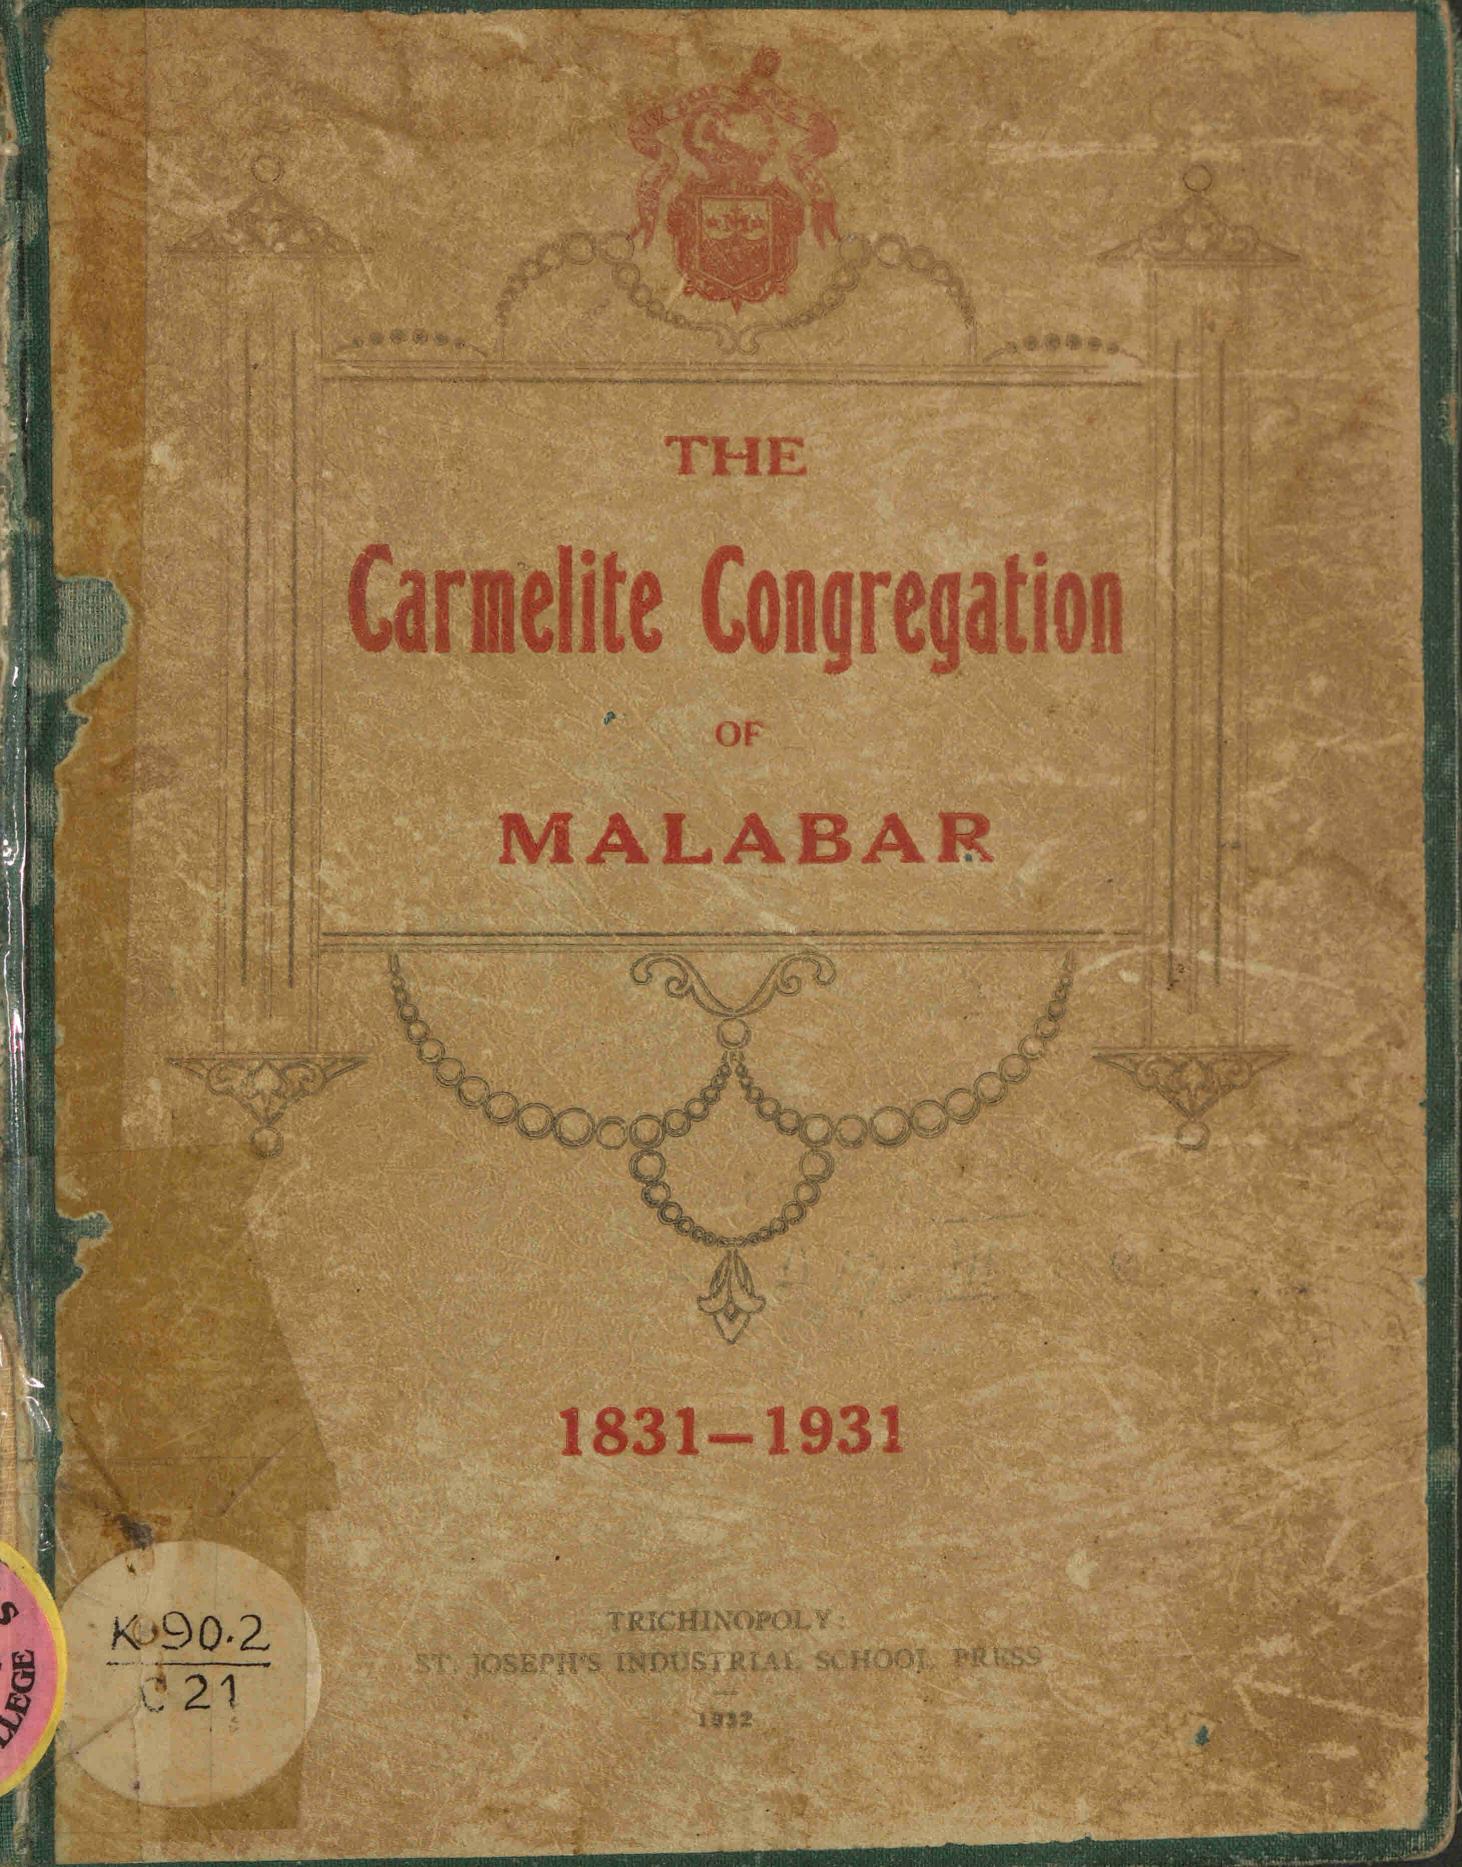 1932 - The Carmelite Congregation of Malabar